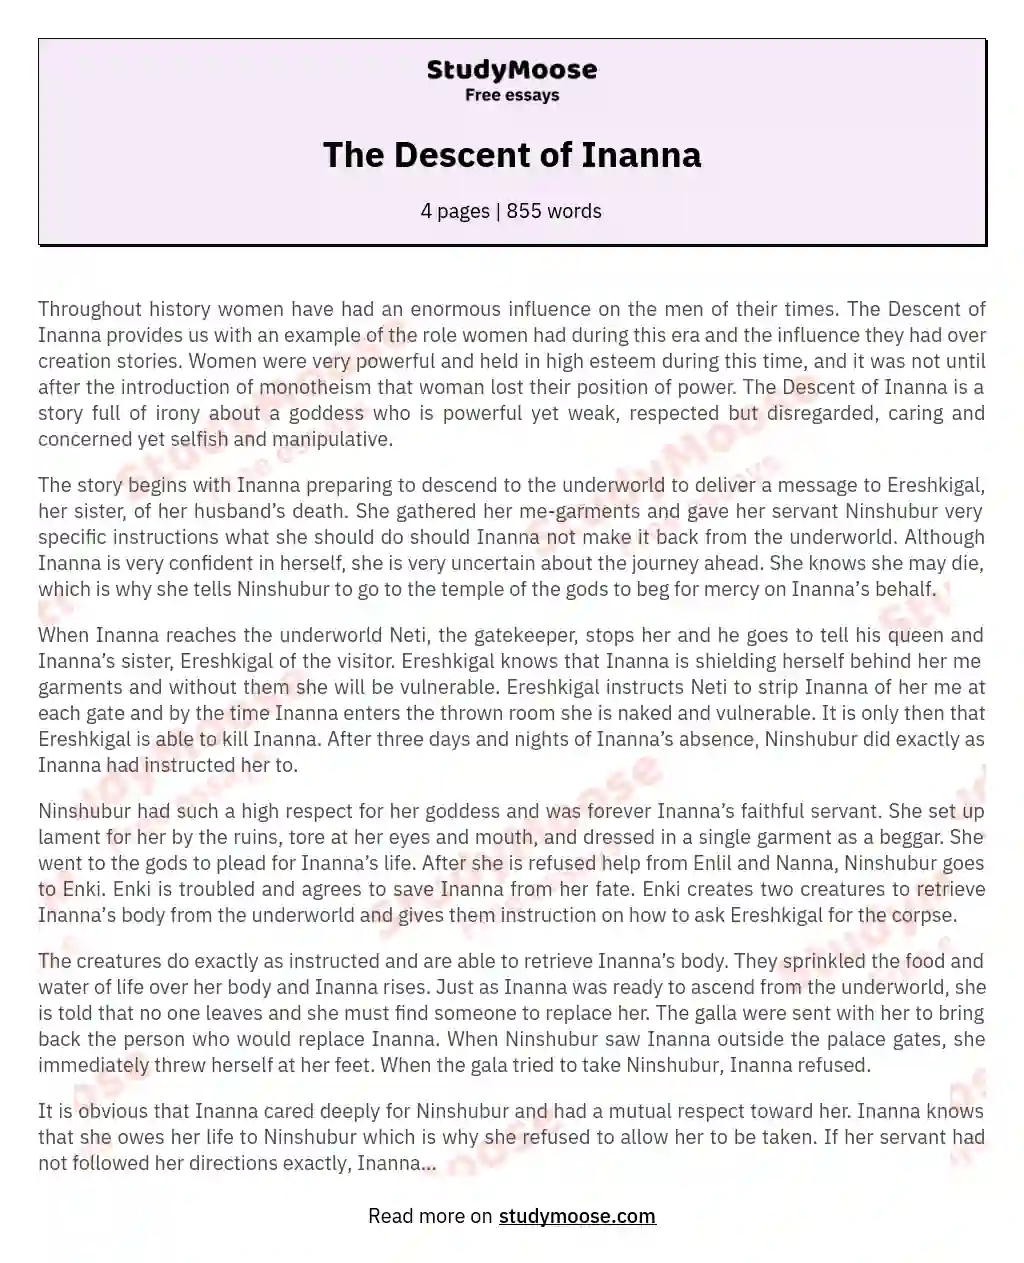 The Descent of Inanna essay